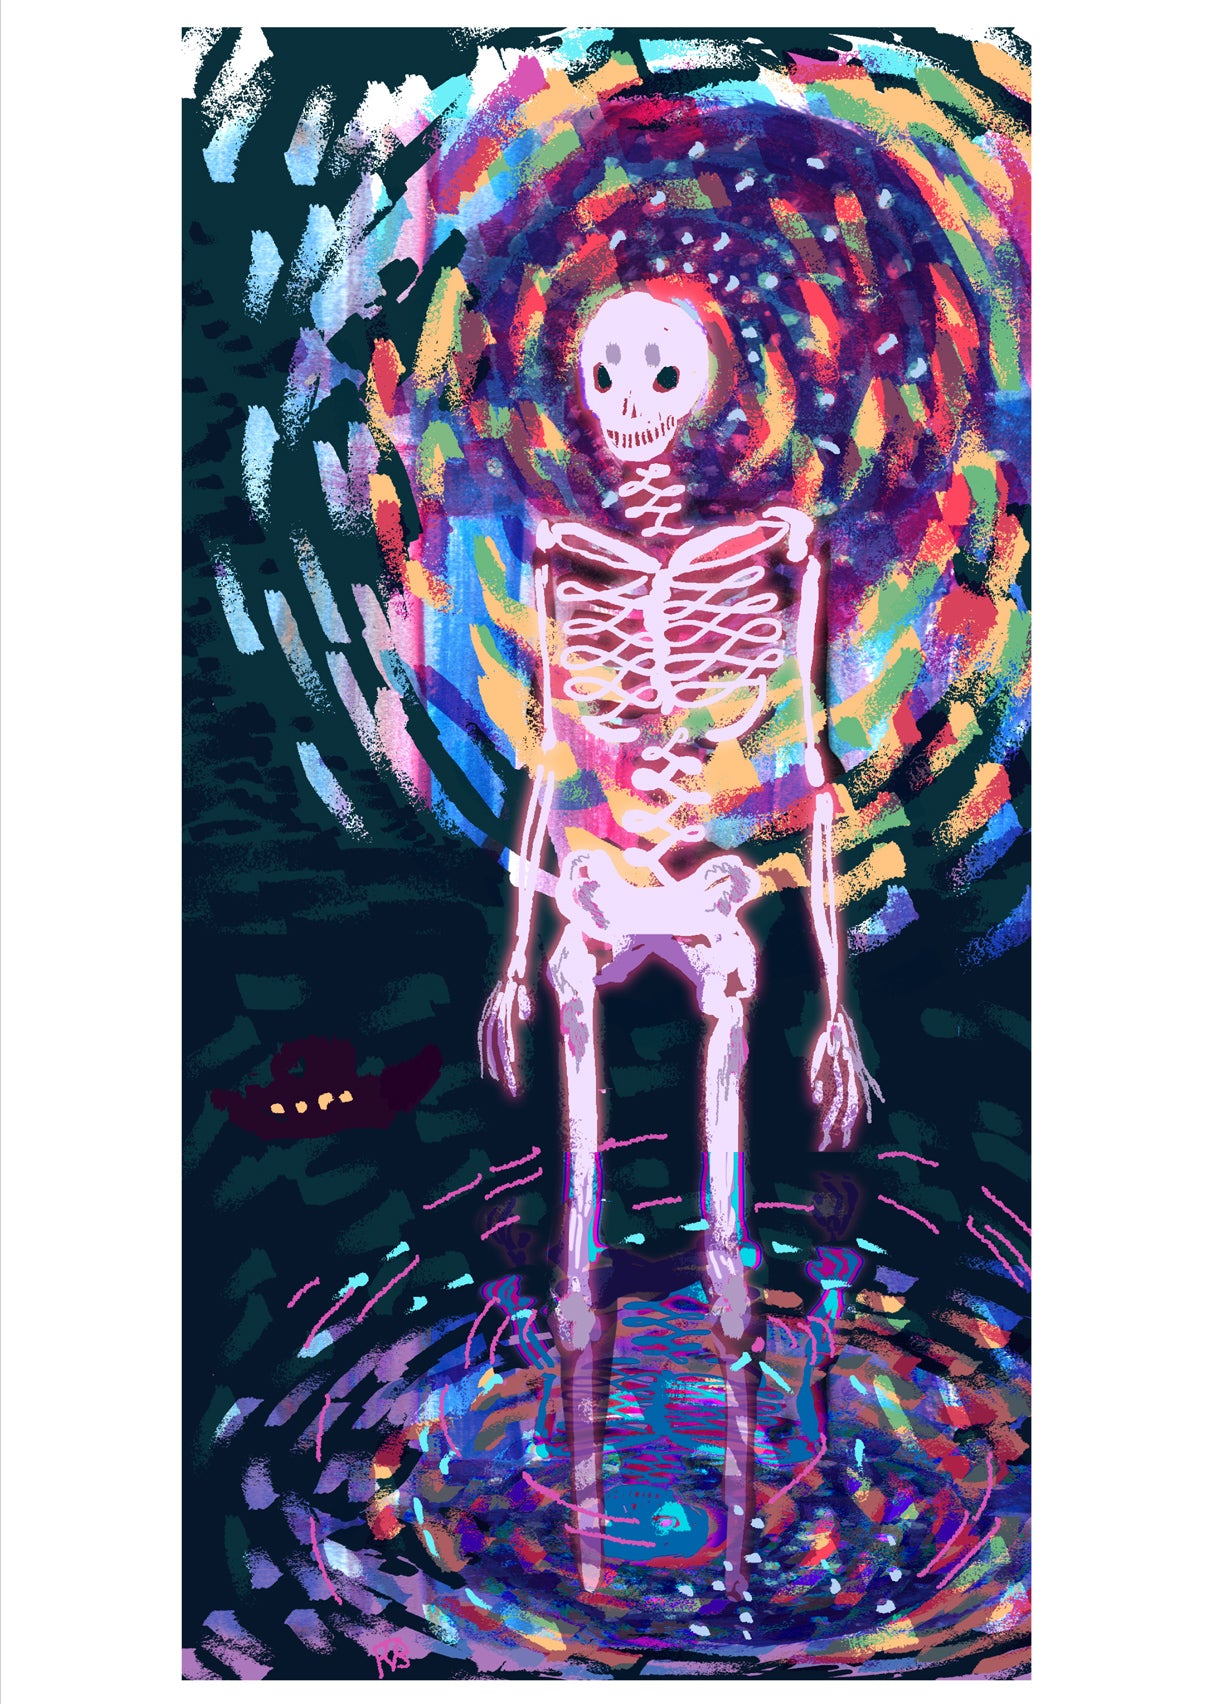 Colourful Skeleton prints: get the set or choose your fave